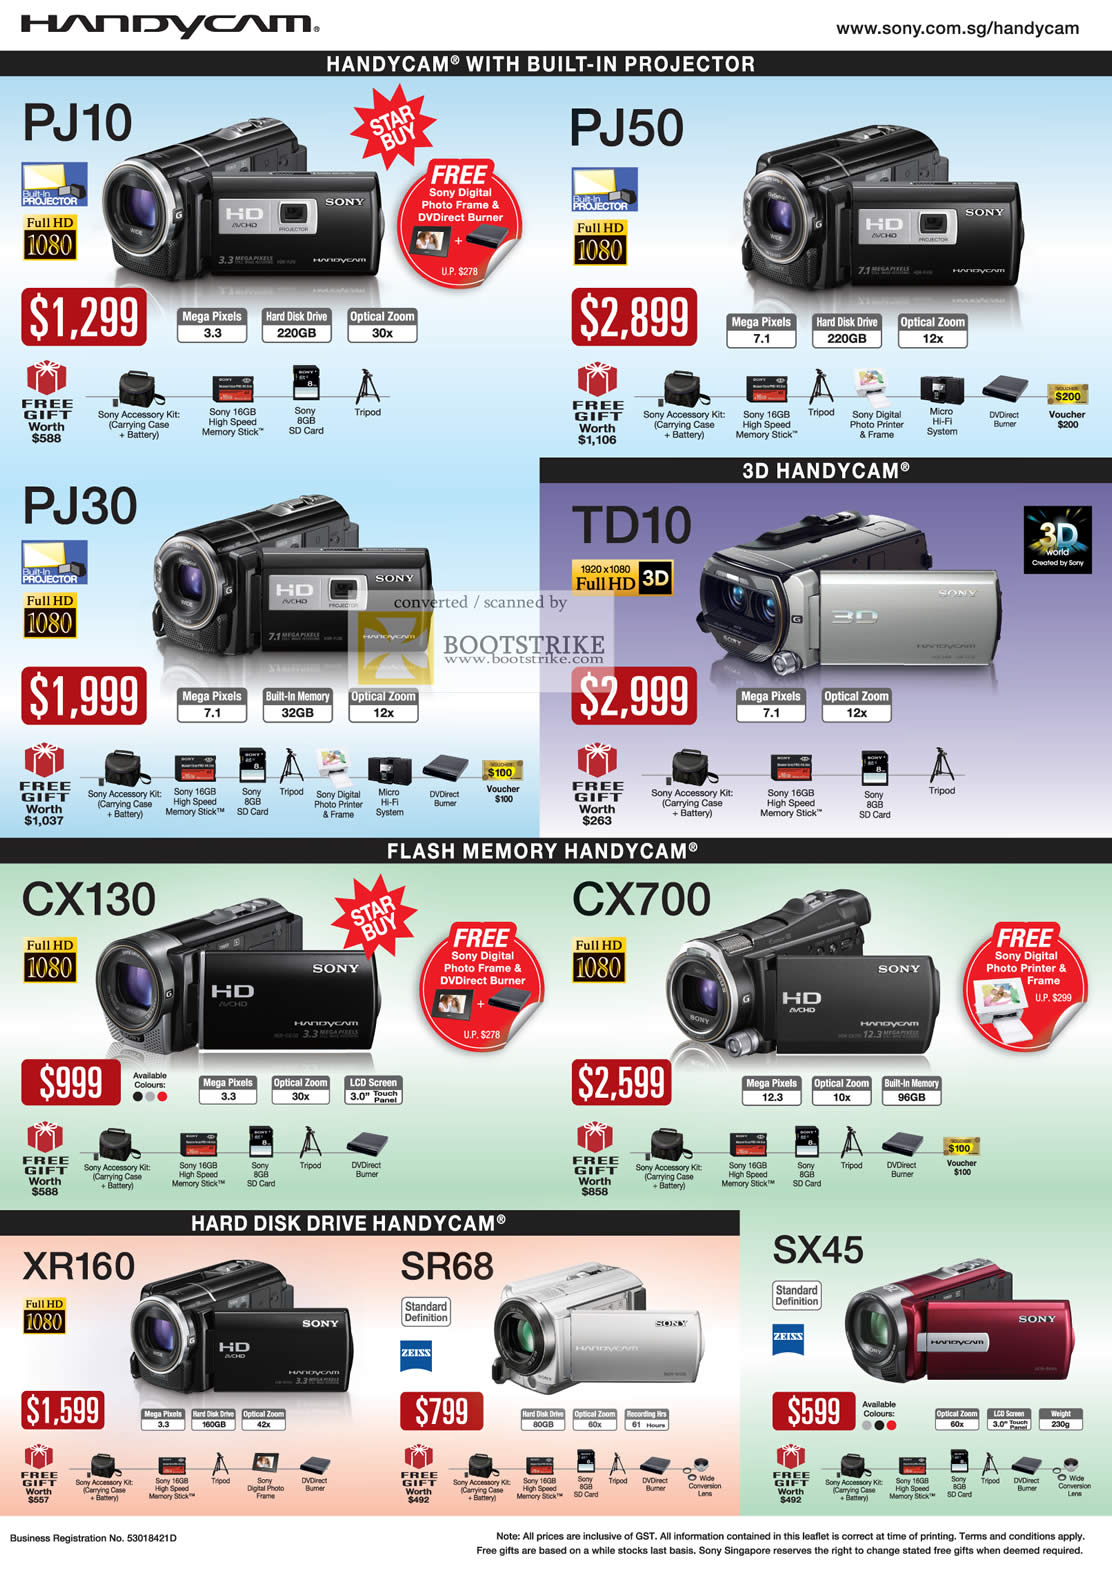 COMEX 2011 price list image brochure of Sony Video Camcorders Handycam HDR PJ10 PJ50 PJ30 TD10 CX130 CX700 XR160 SR68 SX45